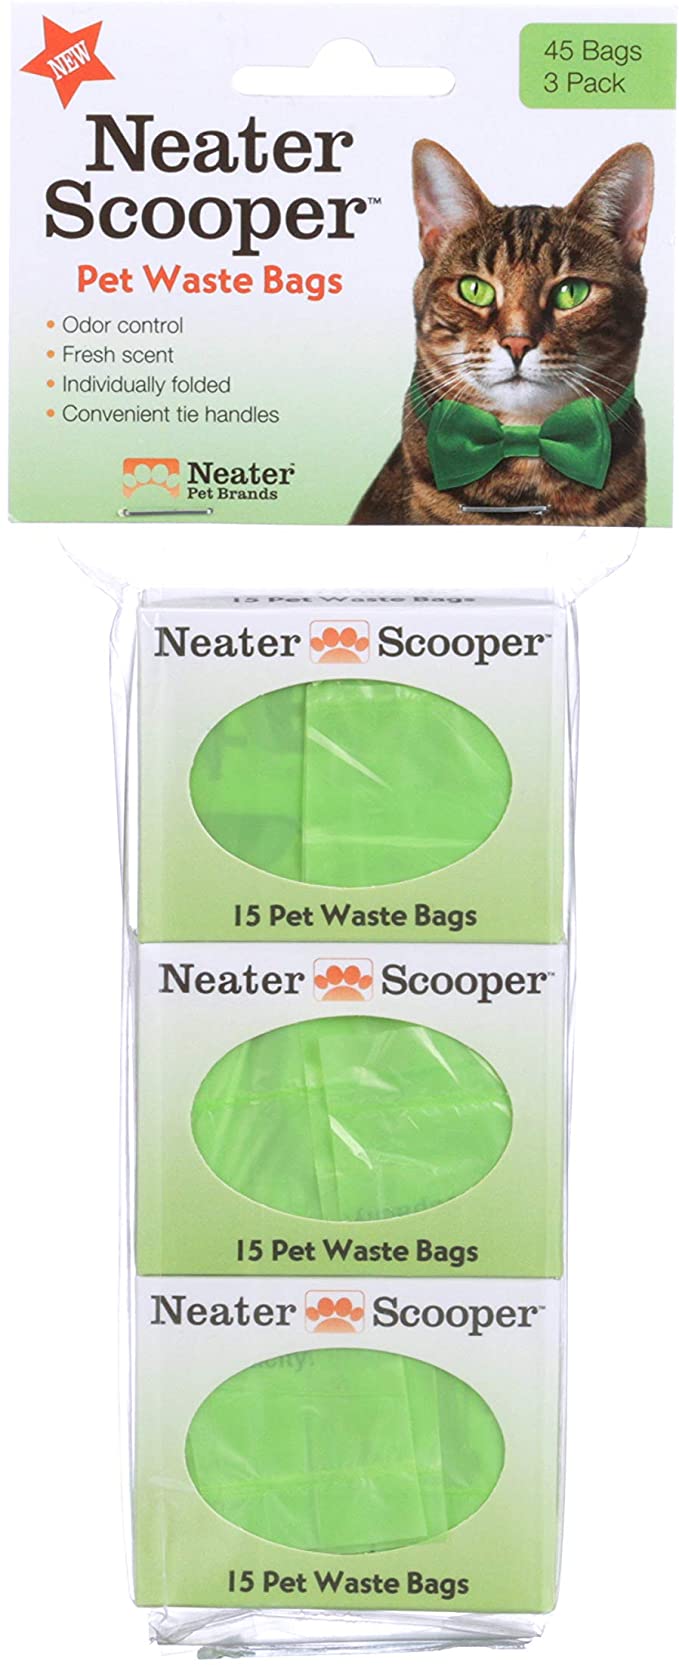 Neater Pet Brands 360-200-HD3 Scooper Refill Bags, Green